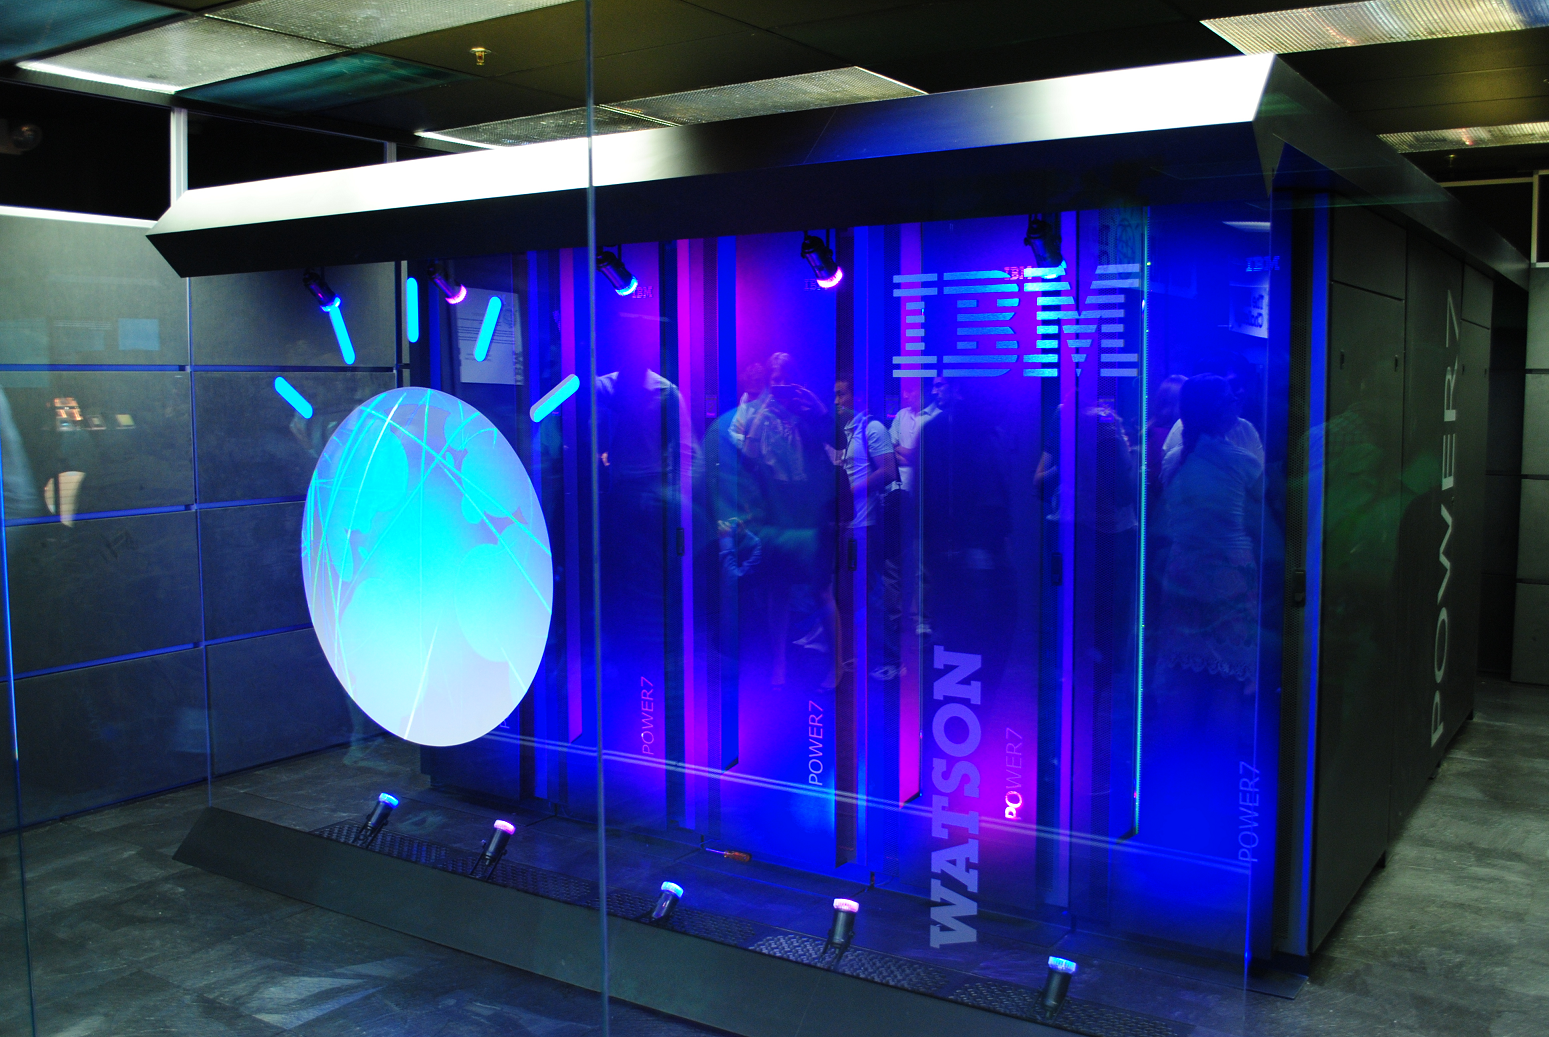 IBM's Watson artificial intelligence machine